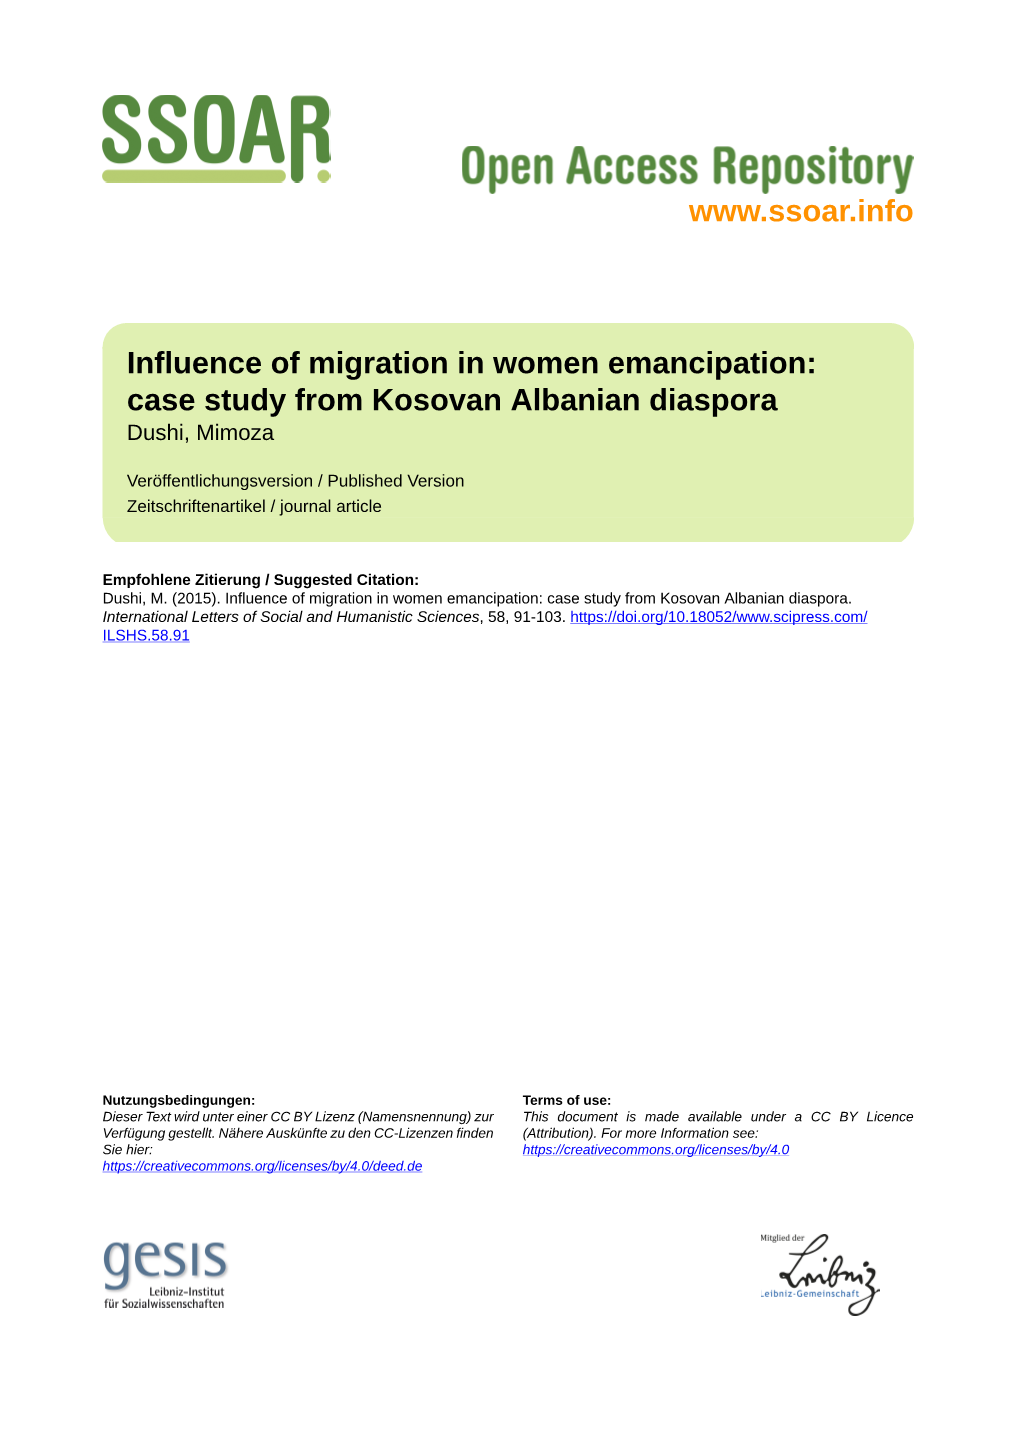 Influence of Migration in Women Emancipation: Case Study from Kosovan Albanian Diaspora Dushi, Mimoza